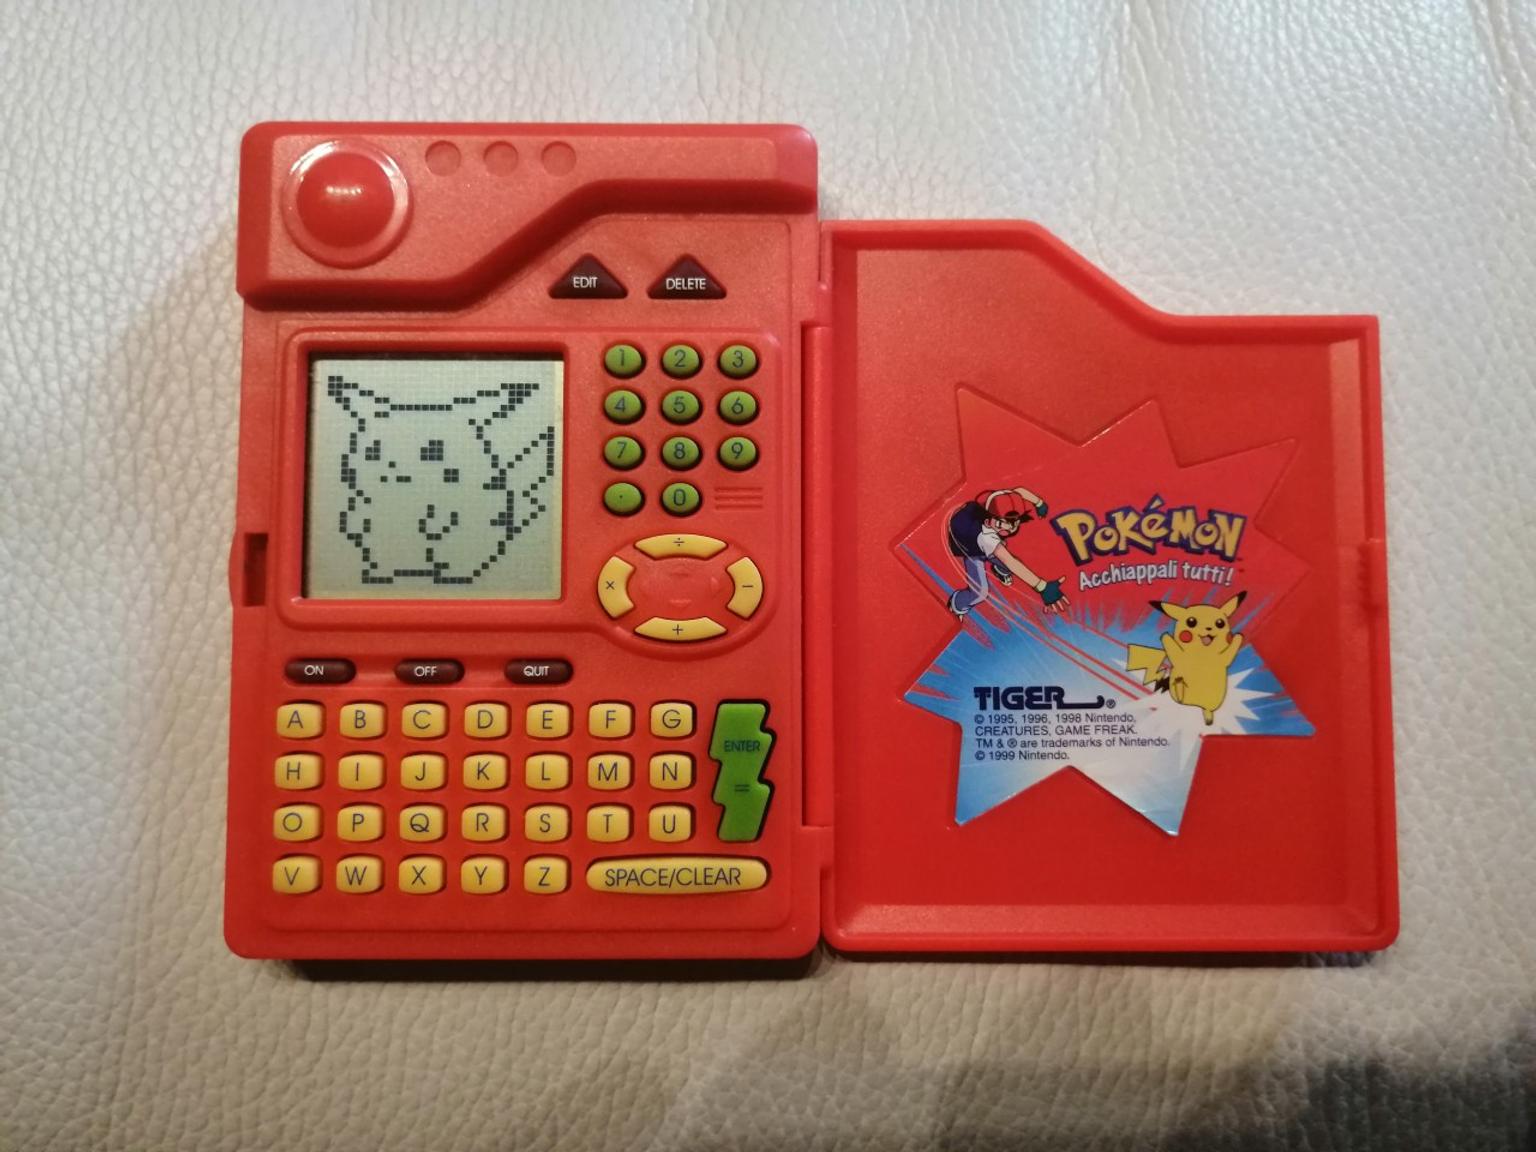 Pokedex Pokémon Tiger in 20020 Lainate for €50.00 for sale | Shpock